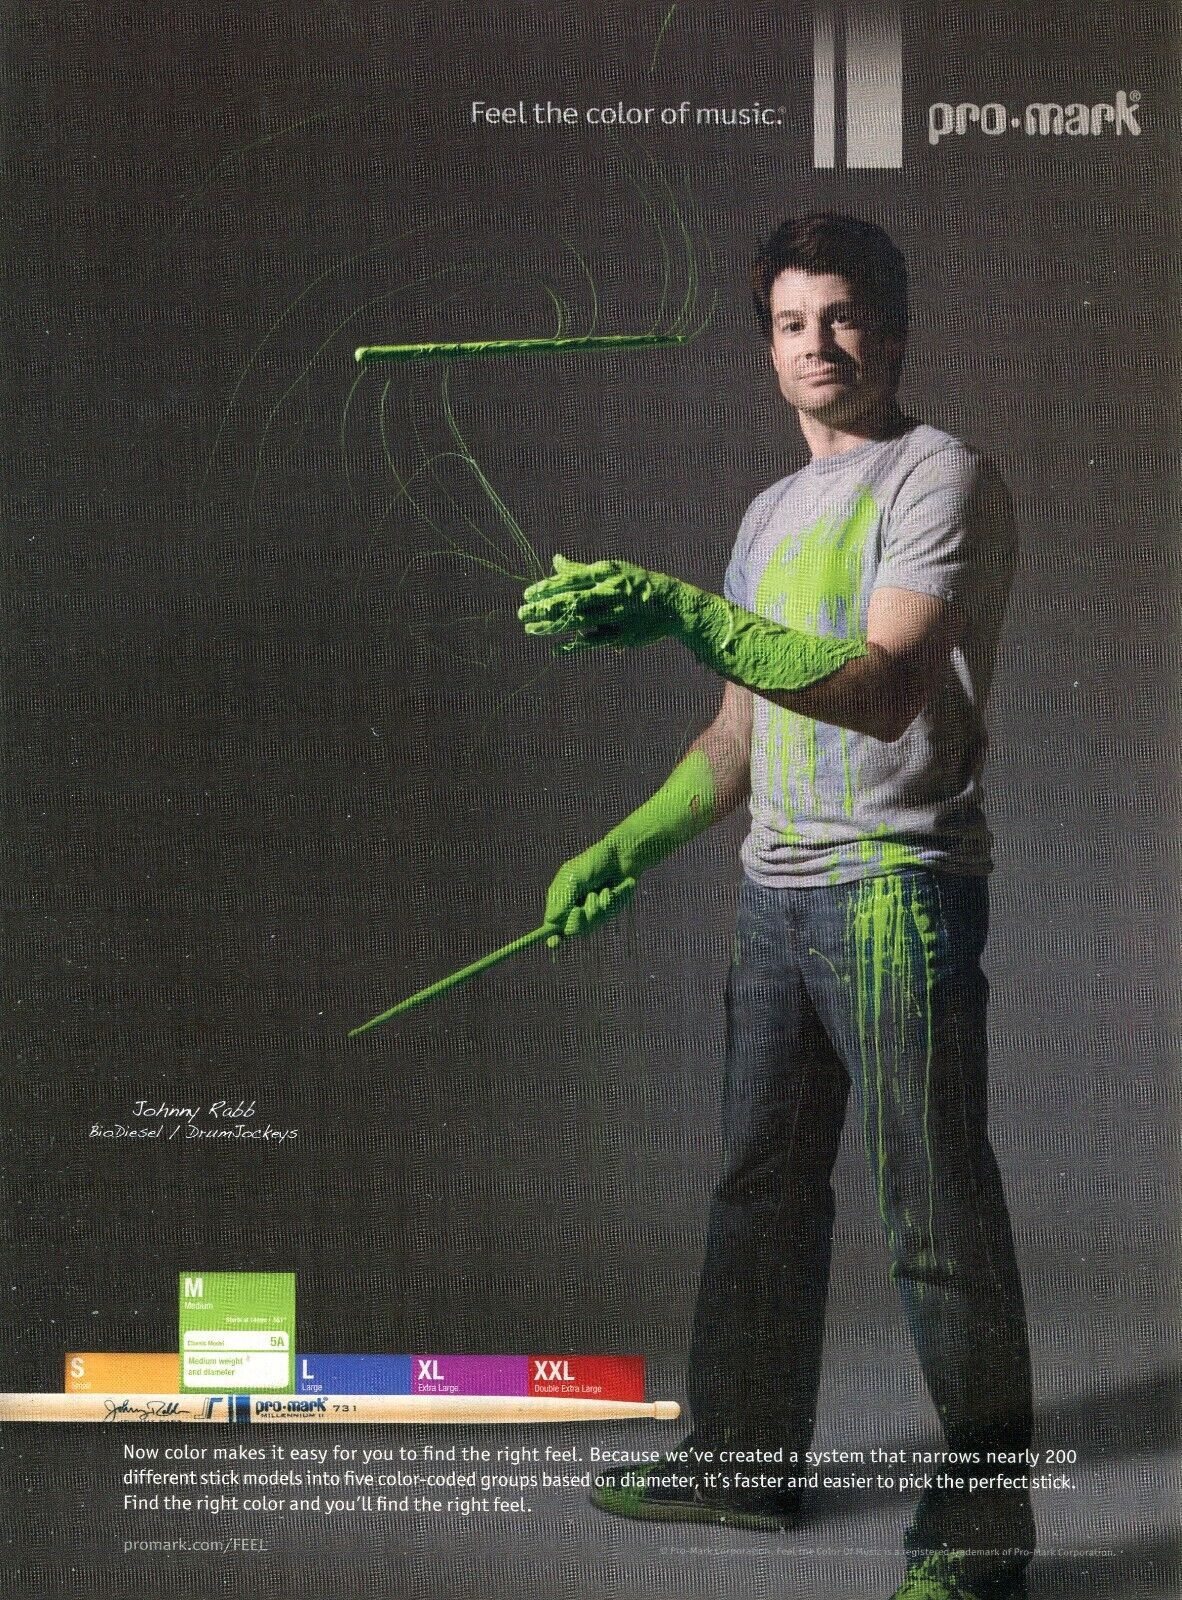 2009 Print Ad of Promark Drumsticks w Johnny Rabb of BioDiesel